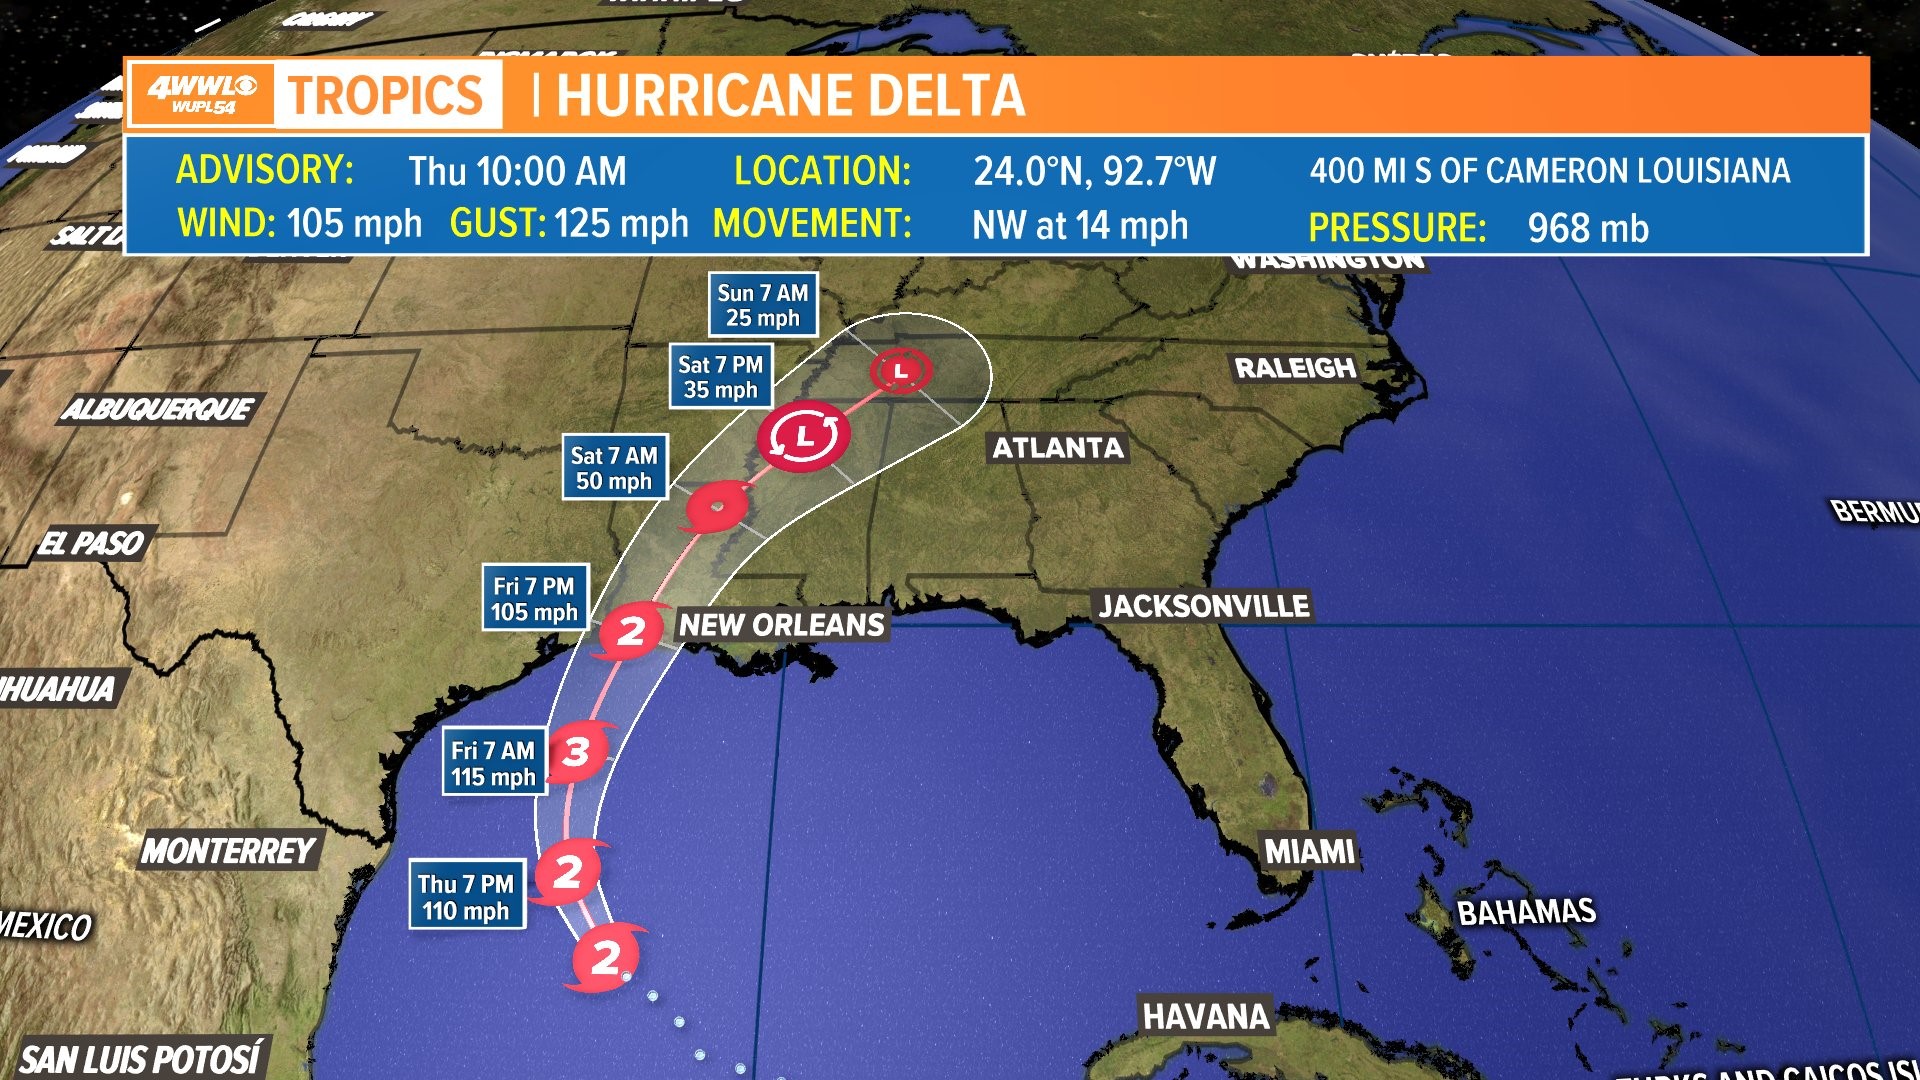 Thursday 10 am Tropics update: Hurricane Delta brings chances of Tornados | nrd.kbic-nsn.gov